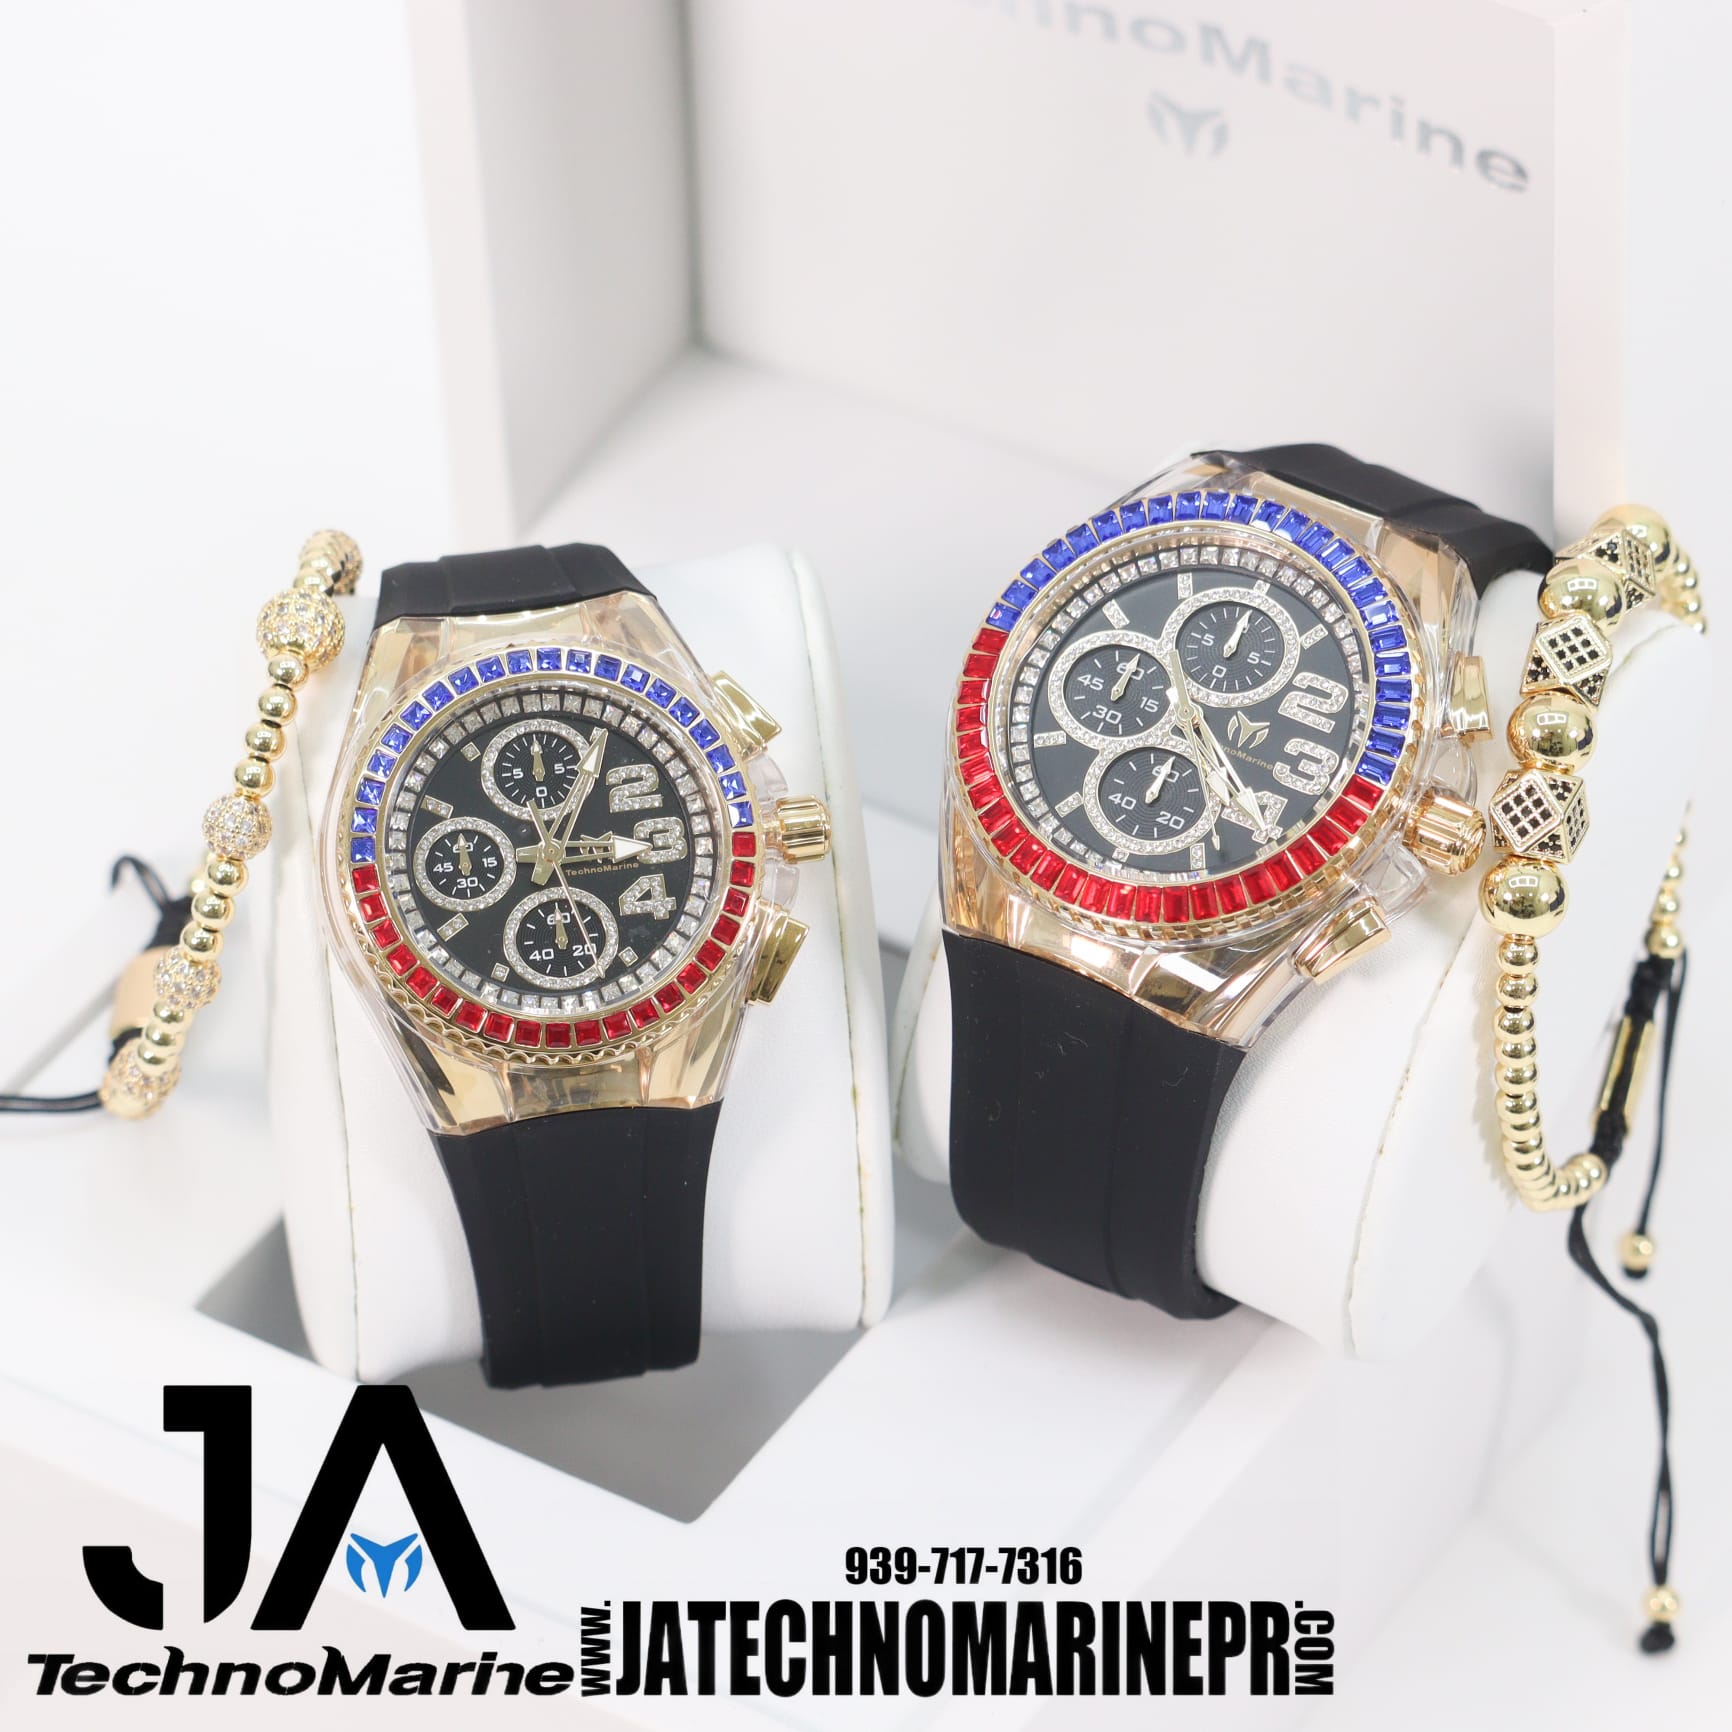 Set de relojes technomarine de hombre 45mm y mujer 40mm